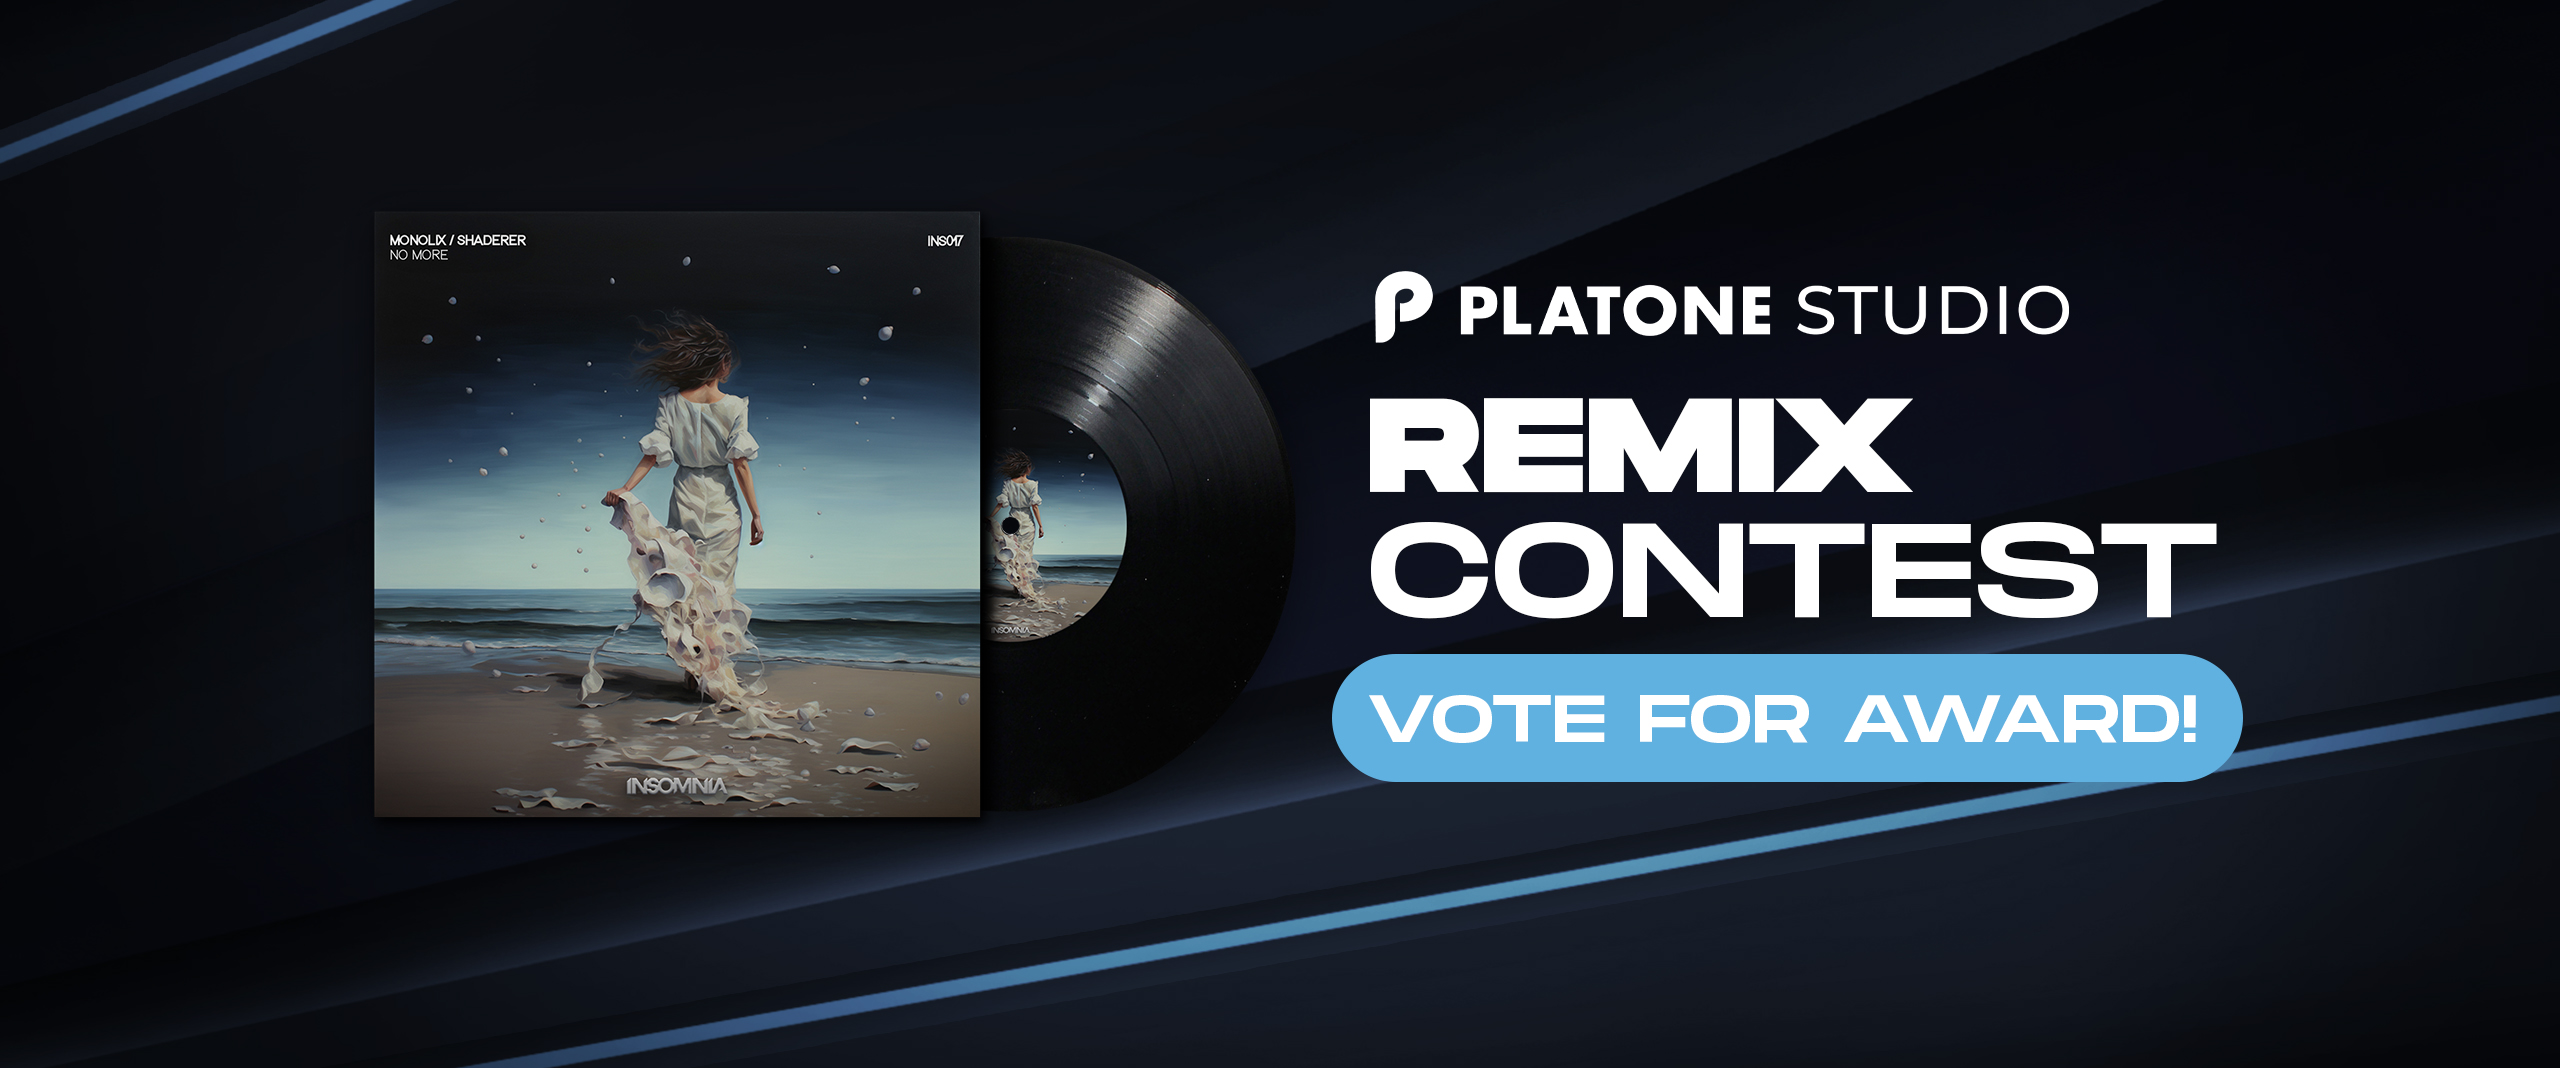 Remix Content Vote